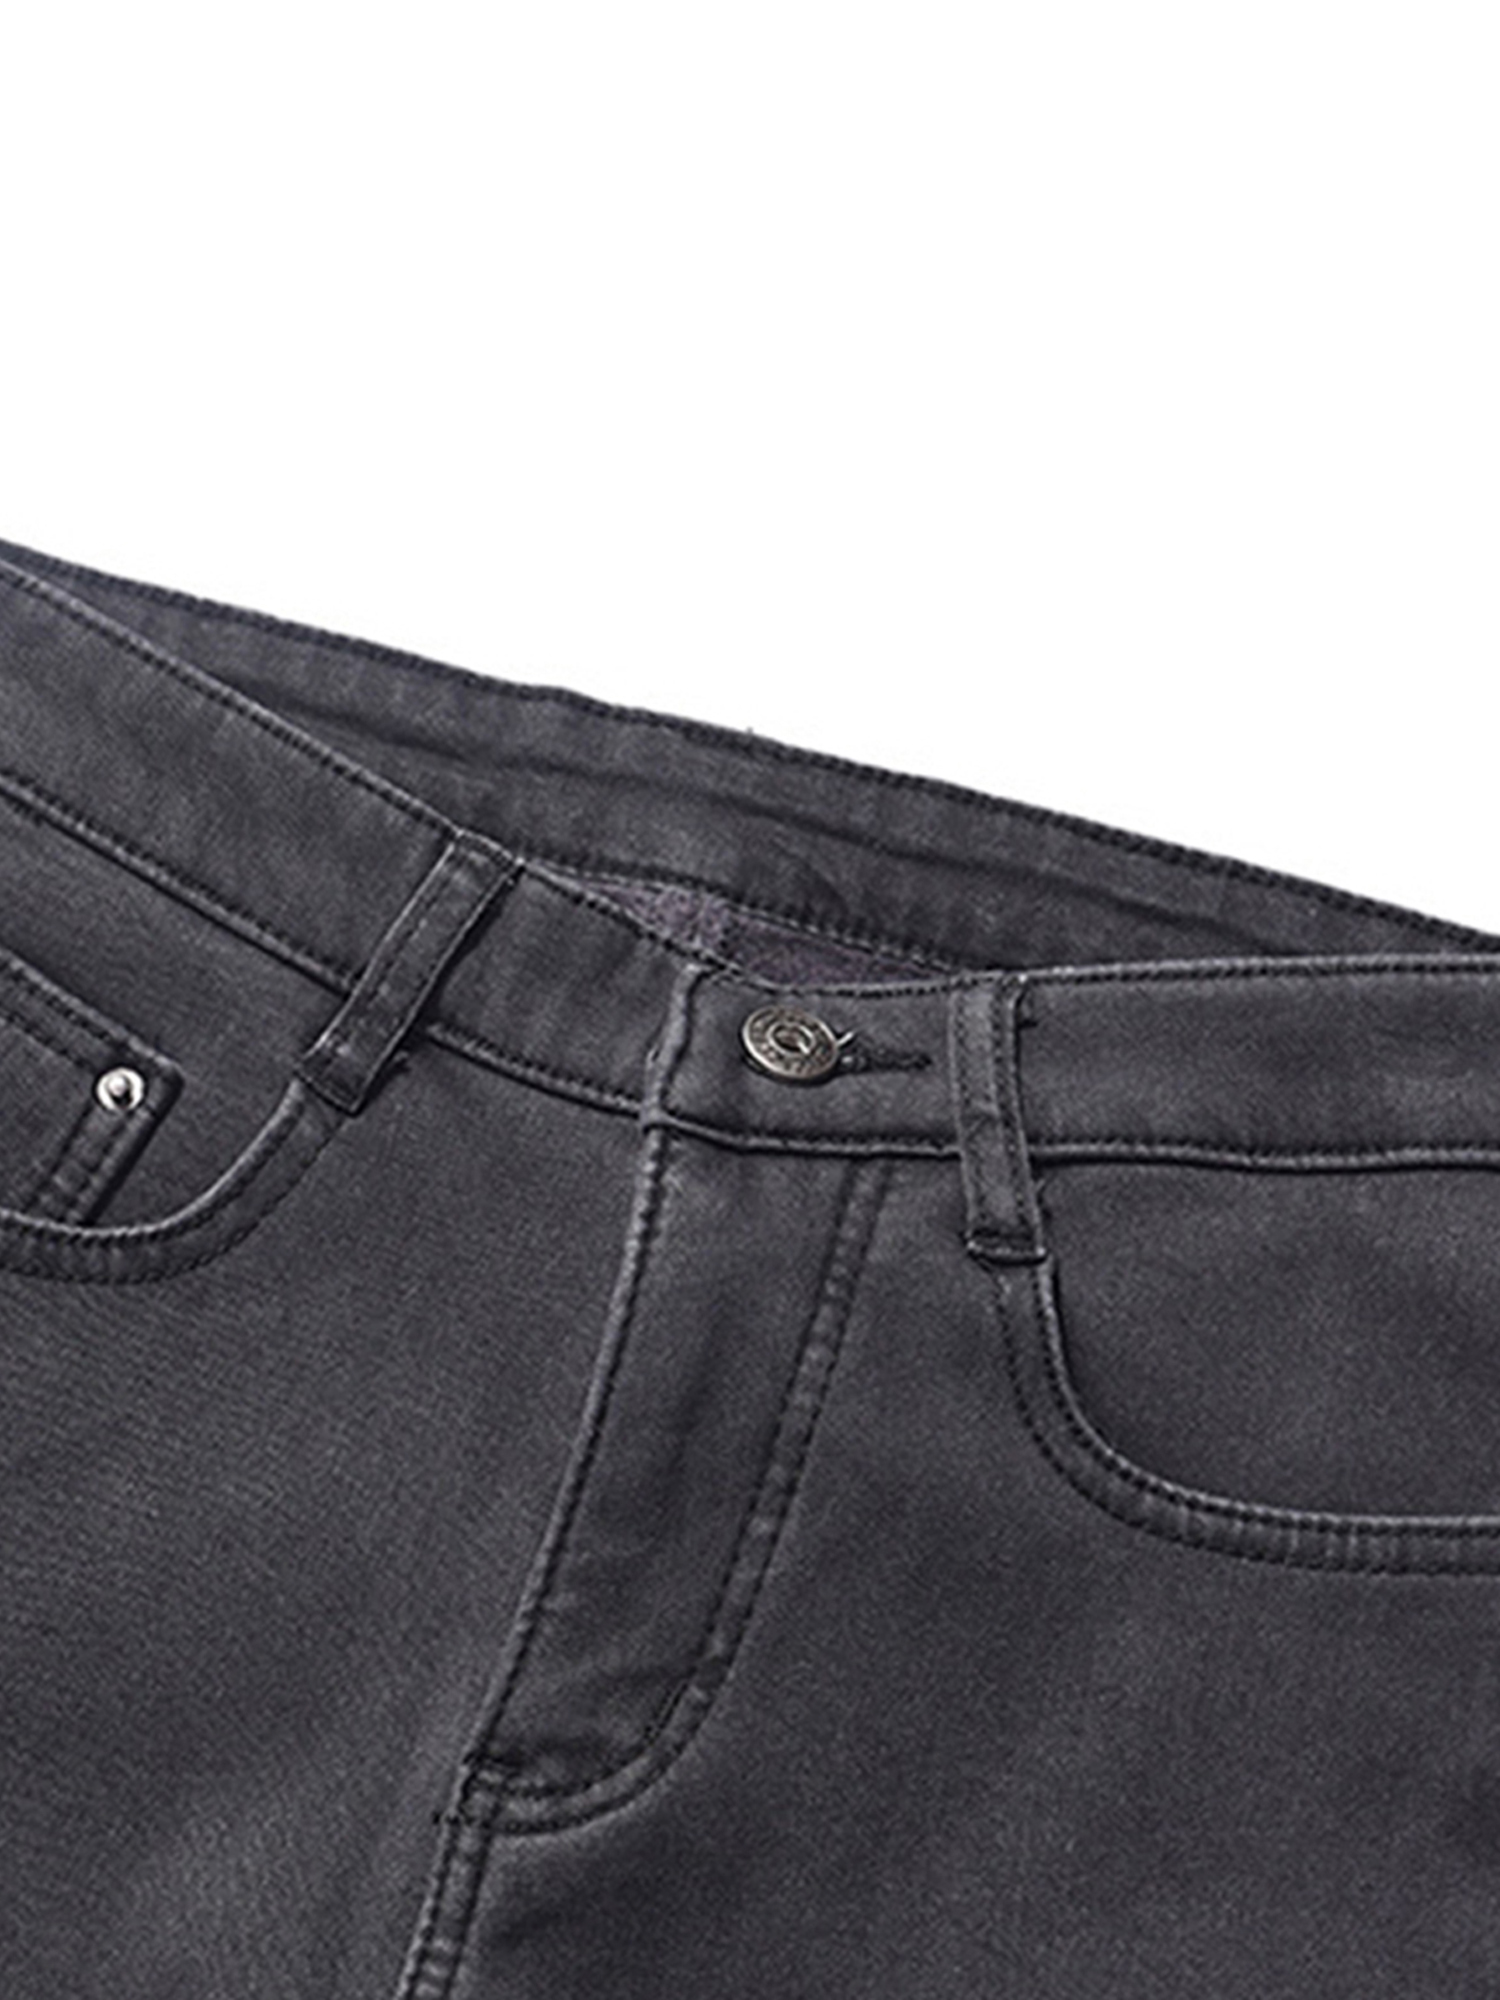 Listenwind Womens Warm Fleece Lined Jeans Stretch Skinny Winter Thick Jeggings Denim Long Pants Gray - image 4 of 6